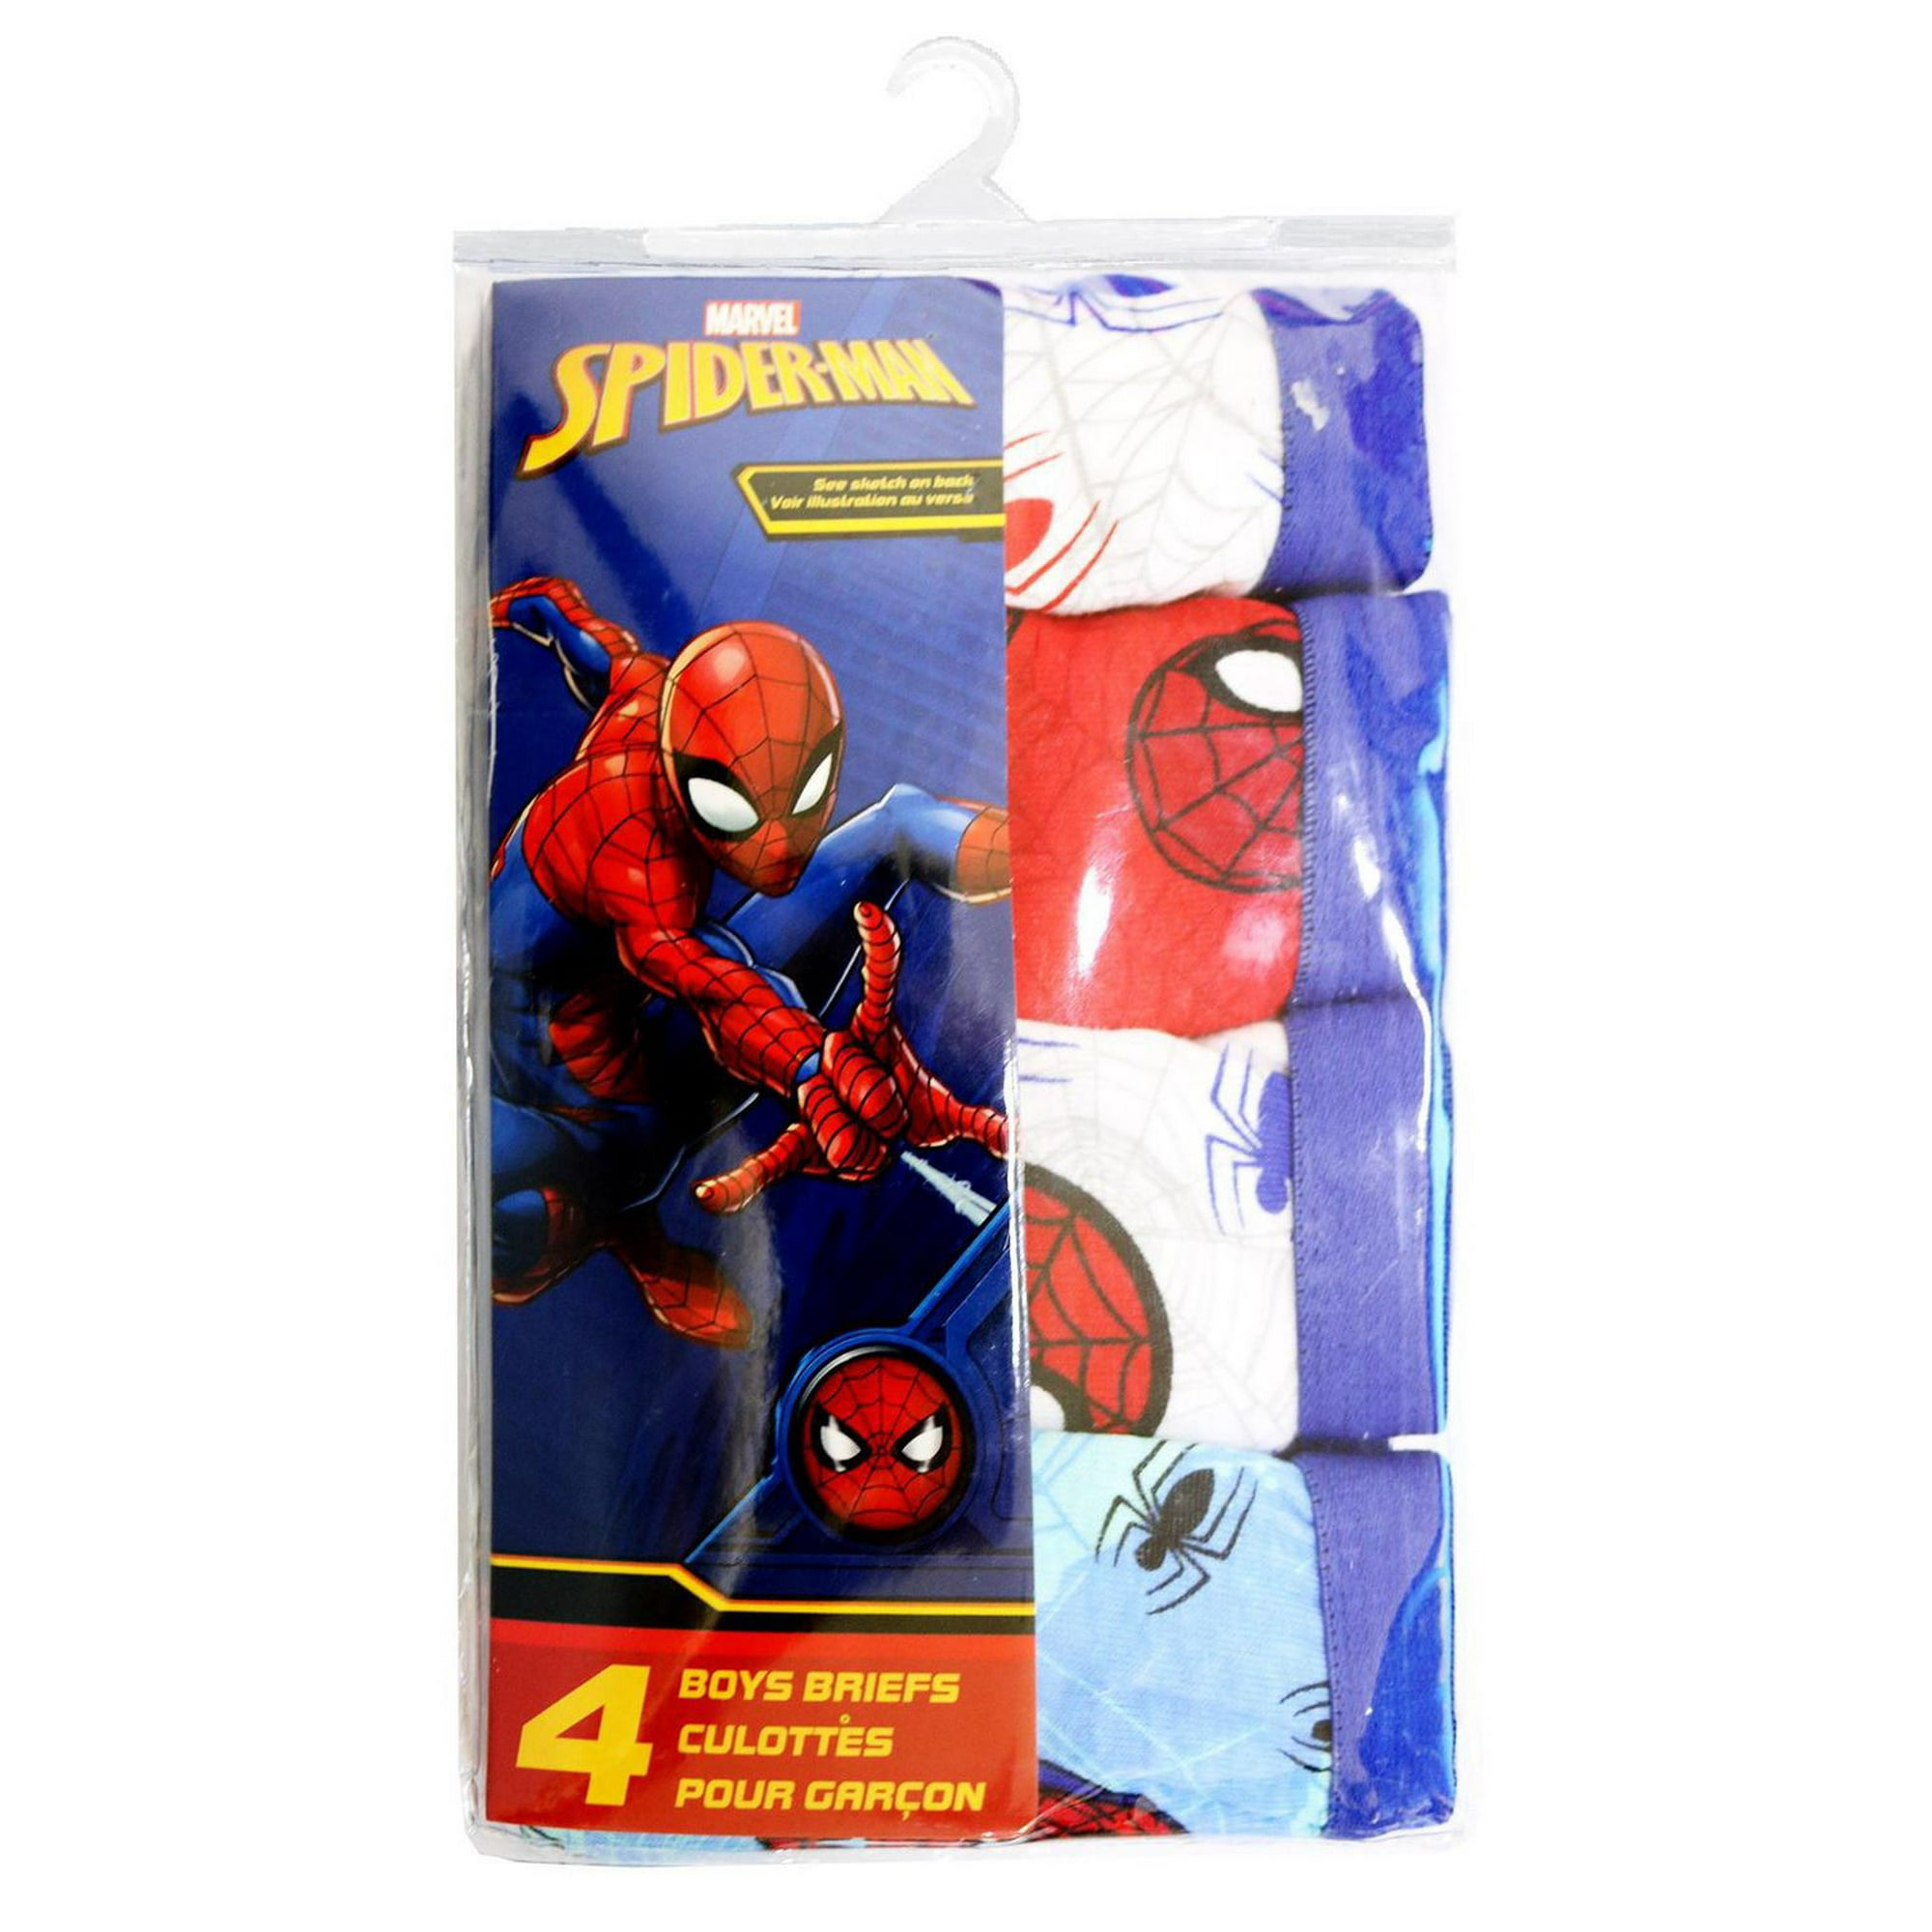 Spider-Man Brief Underwear Four-Pack for Boys, Sizes 2T to 4T